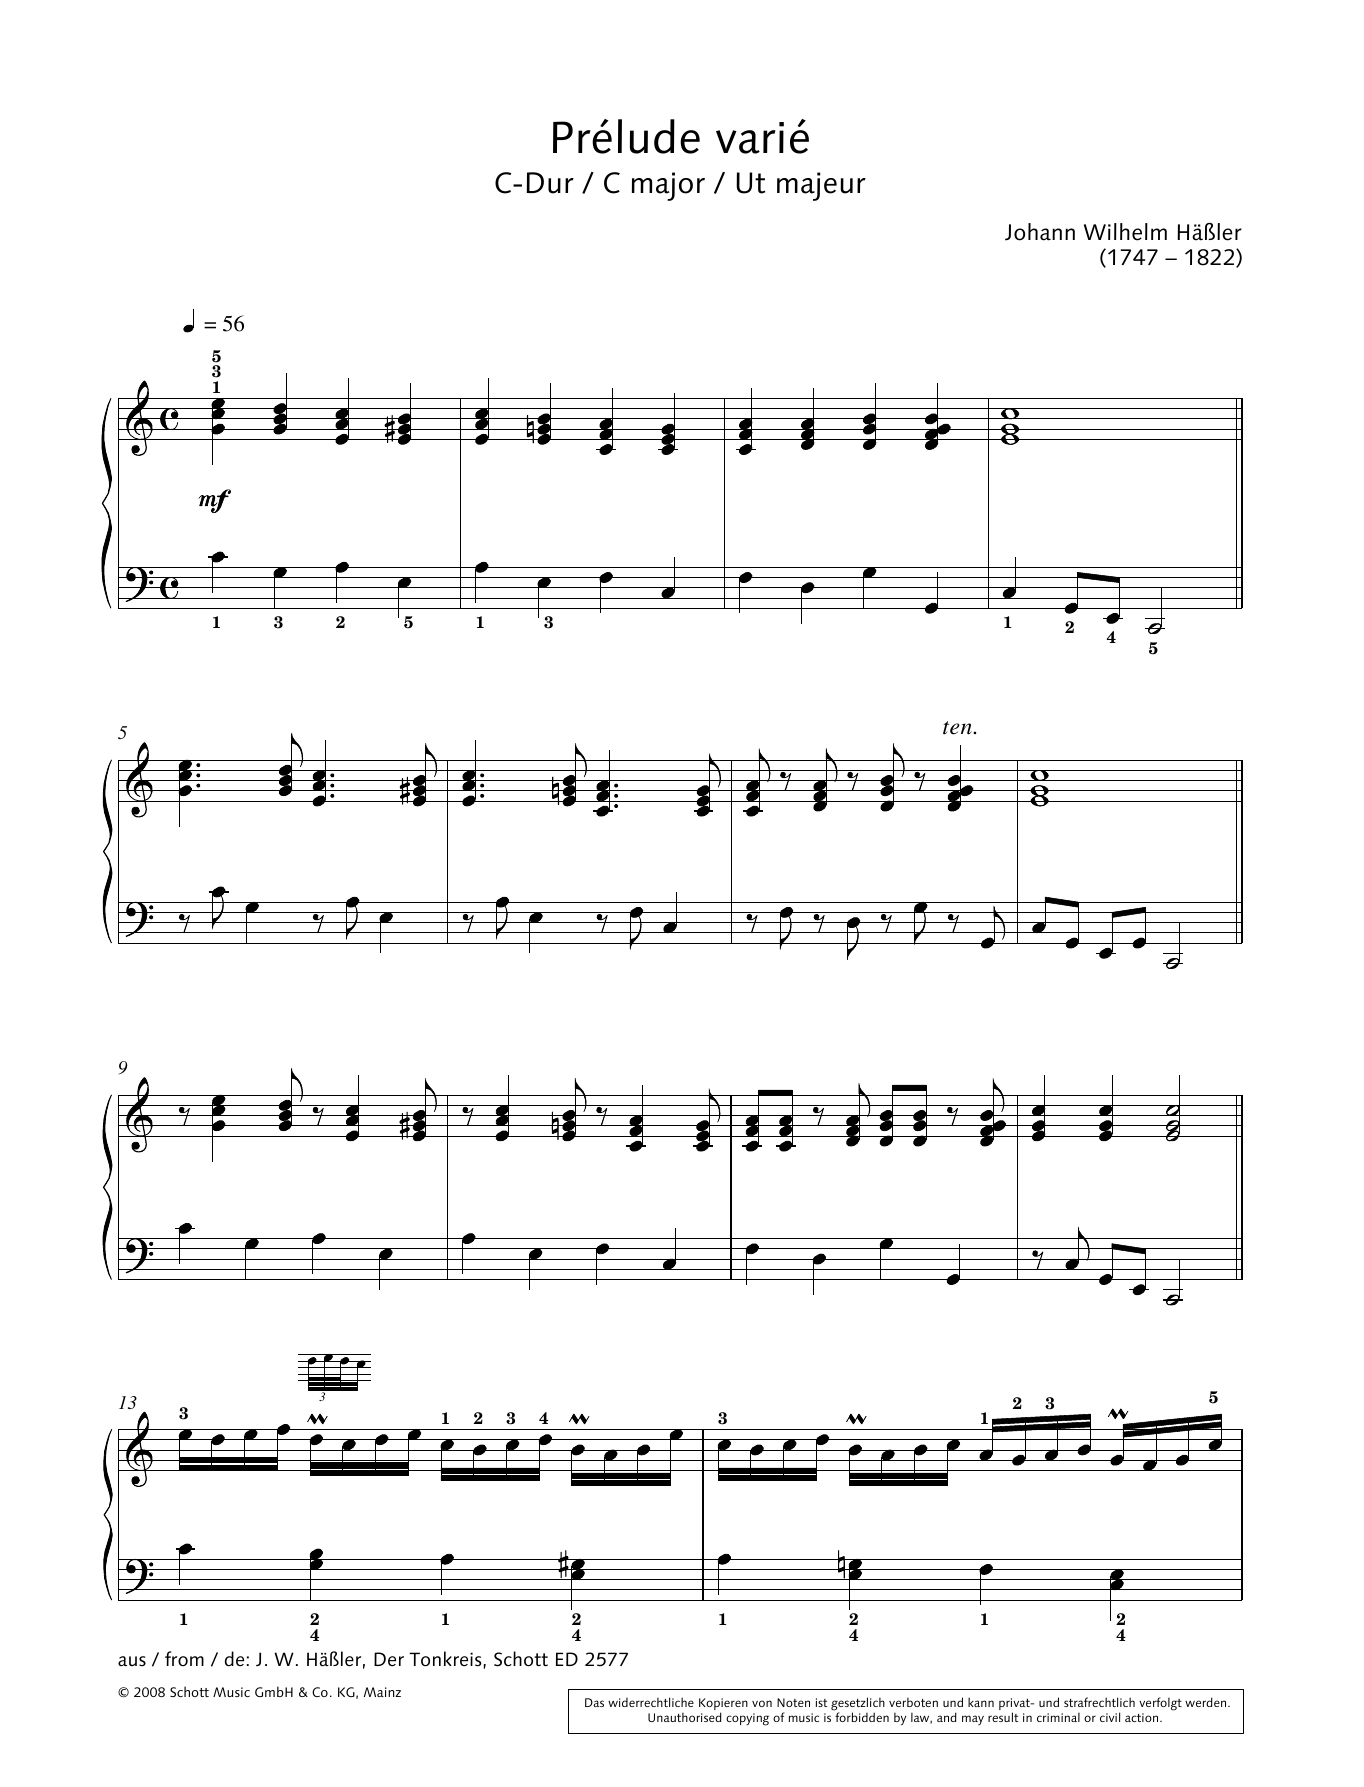 Hans-Gunter Heumann Prélude varié in C major Sheet Music Notes & Chords for Piano Solo - Download or Print PDF